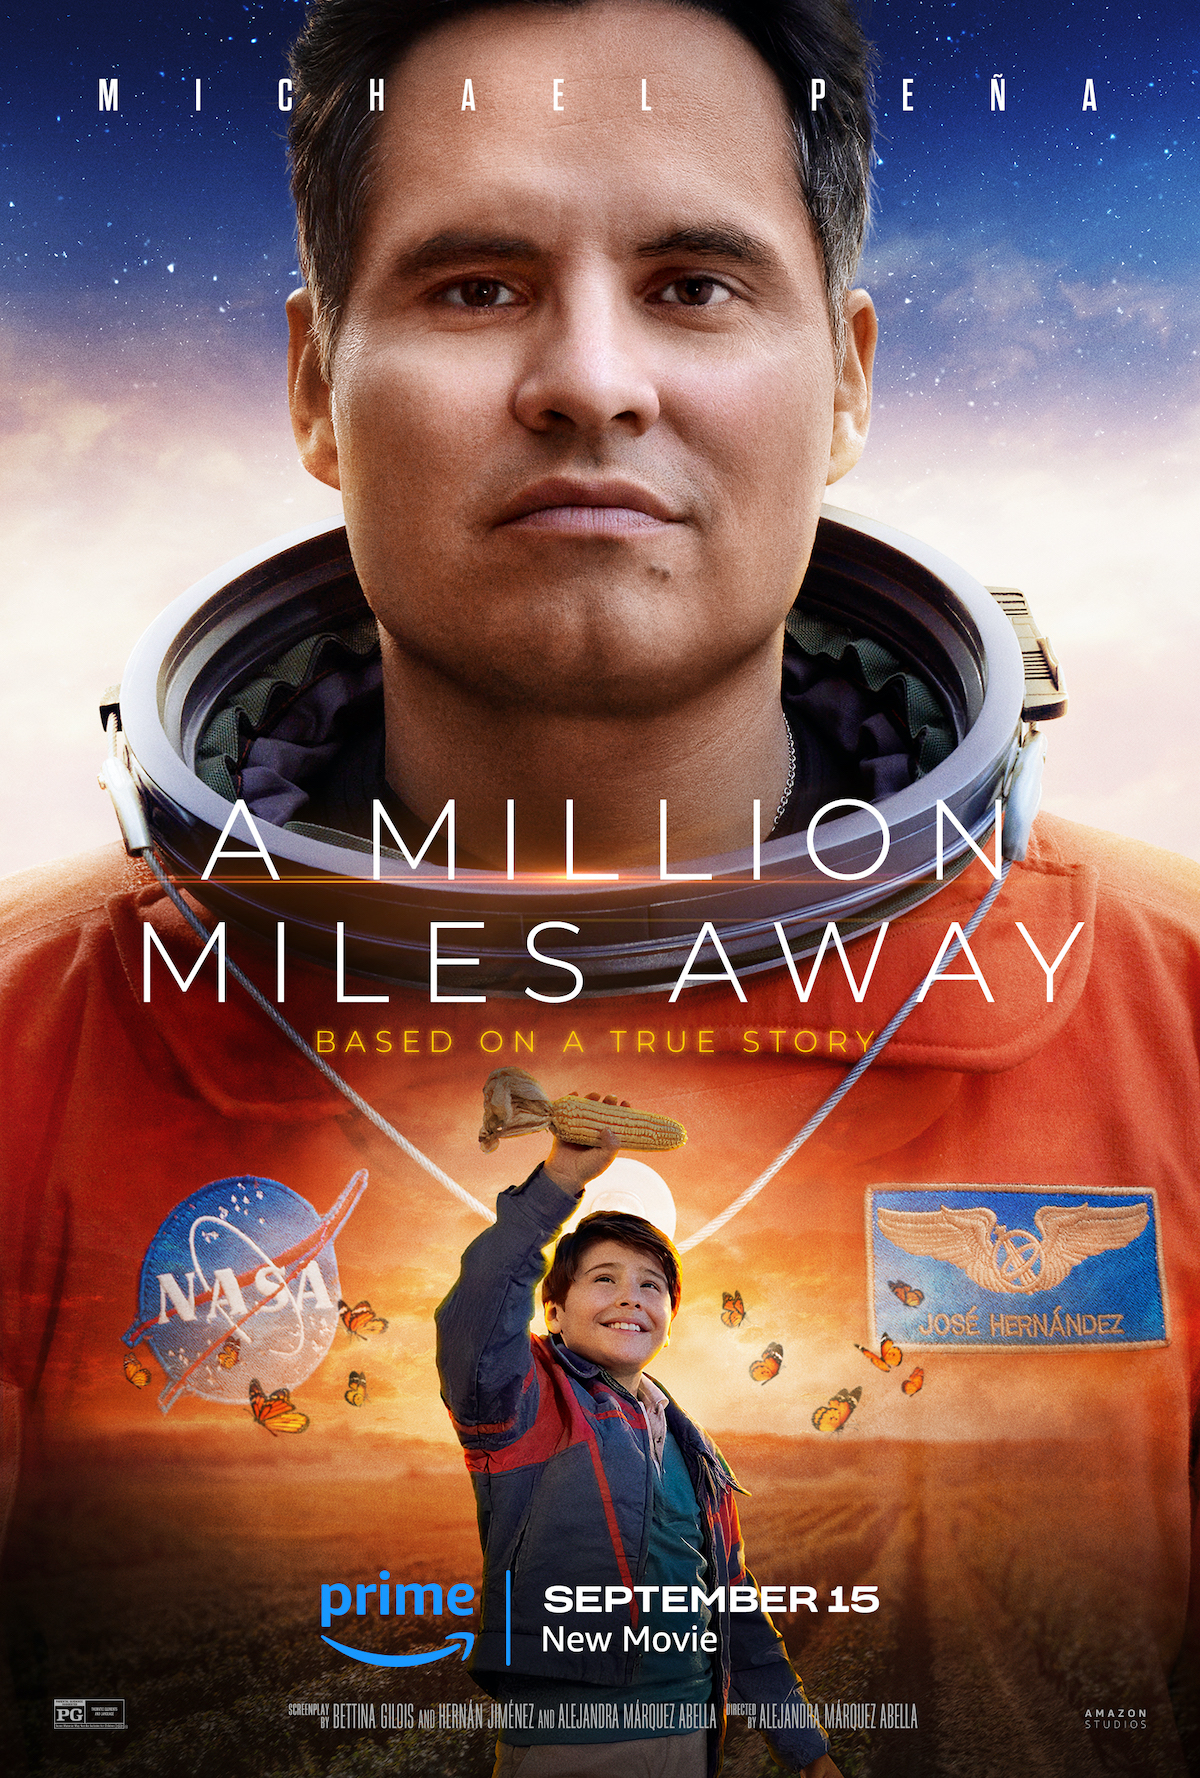 A Million Miles Away Movie Poster.